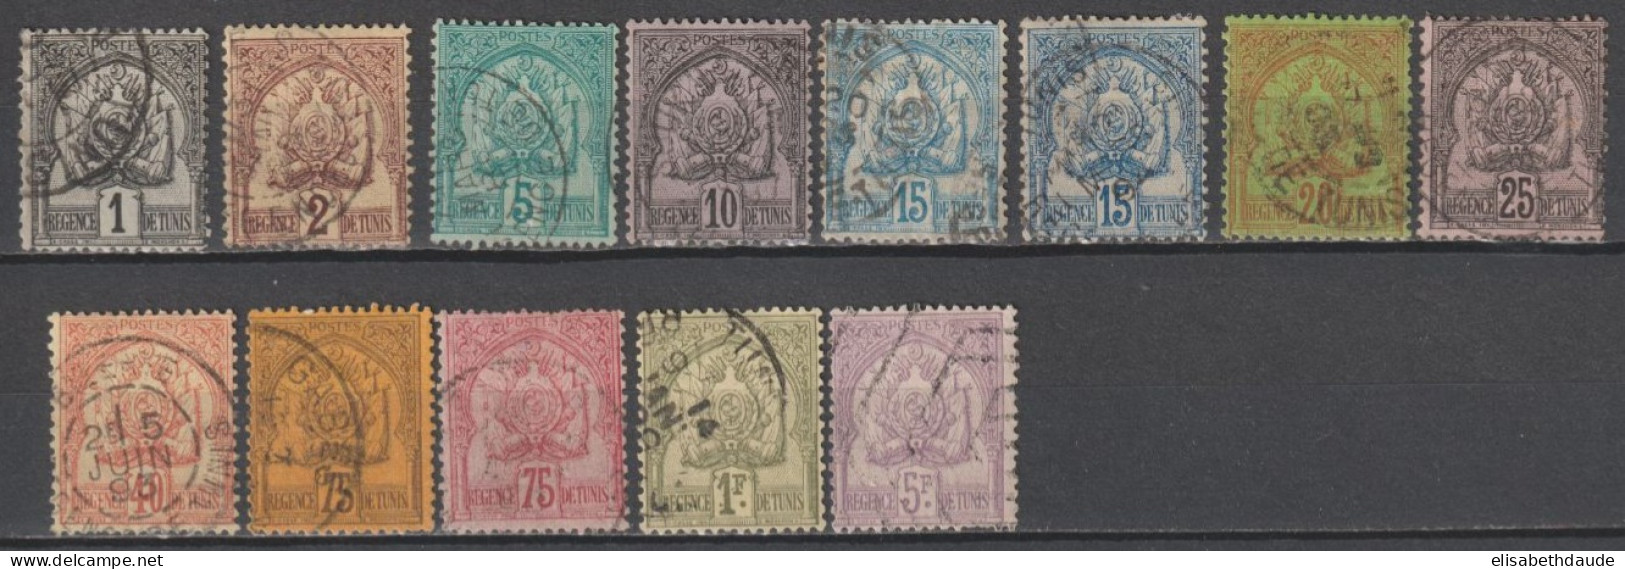 TUNISIE - 1888 - SERIE COMPLETE YVERT N°9/21 OBLITERES - COTE = 280 EUR. - Used Stamps